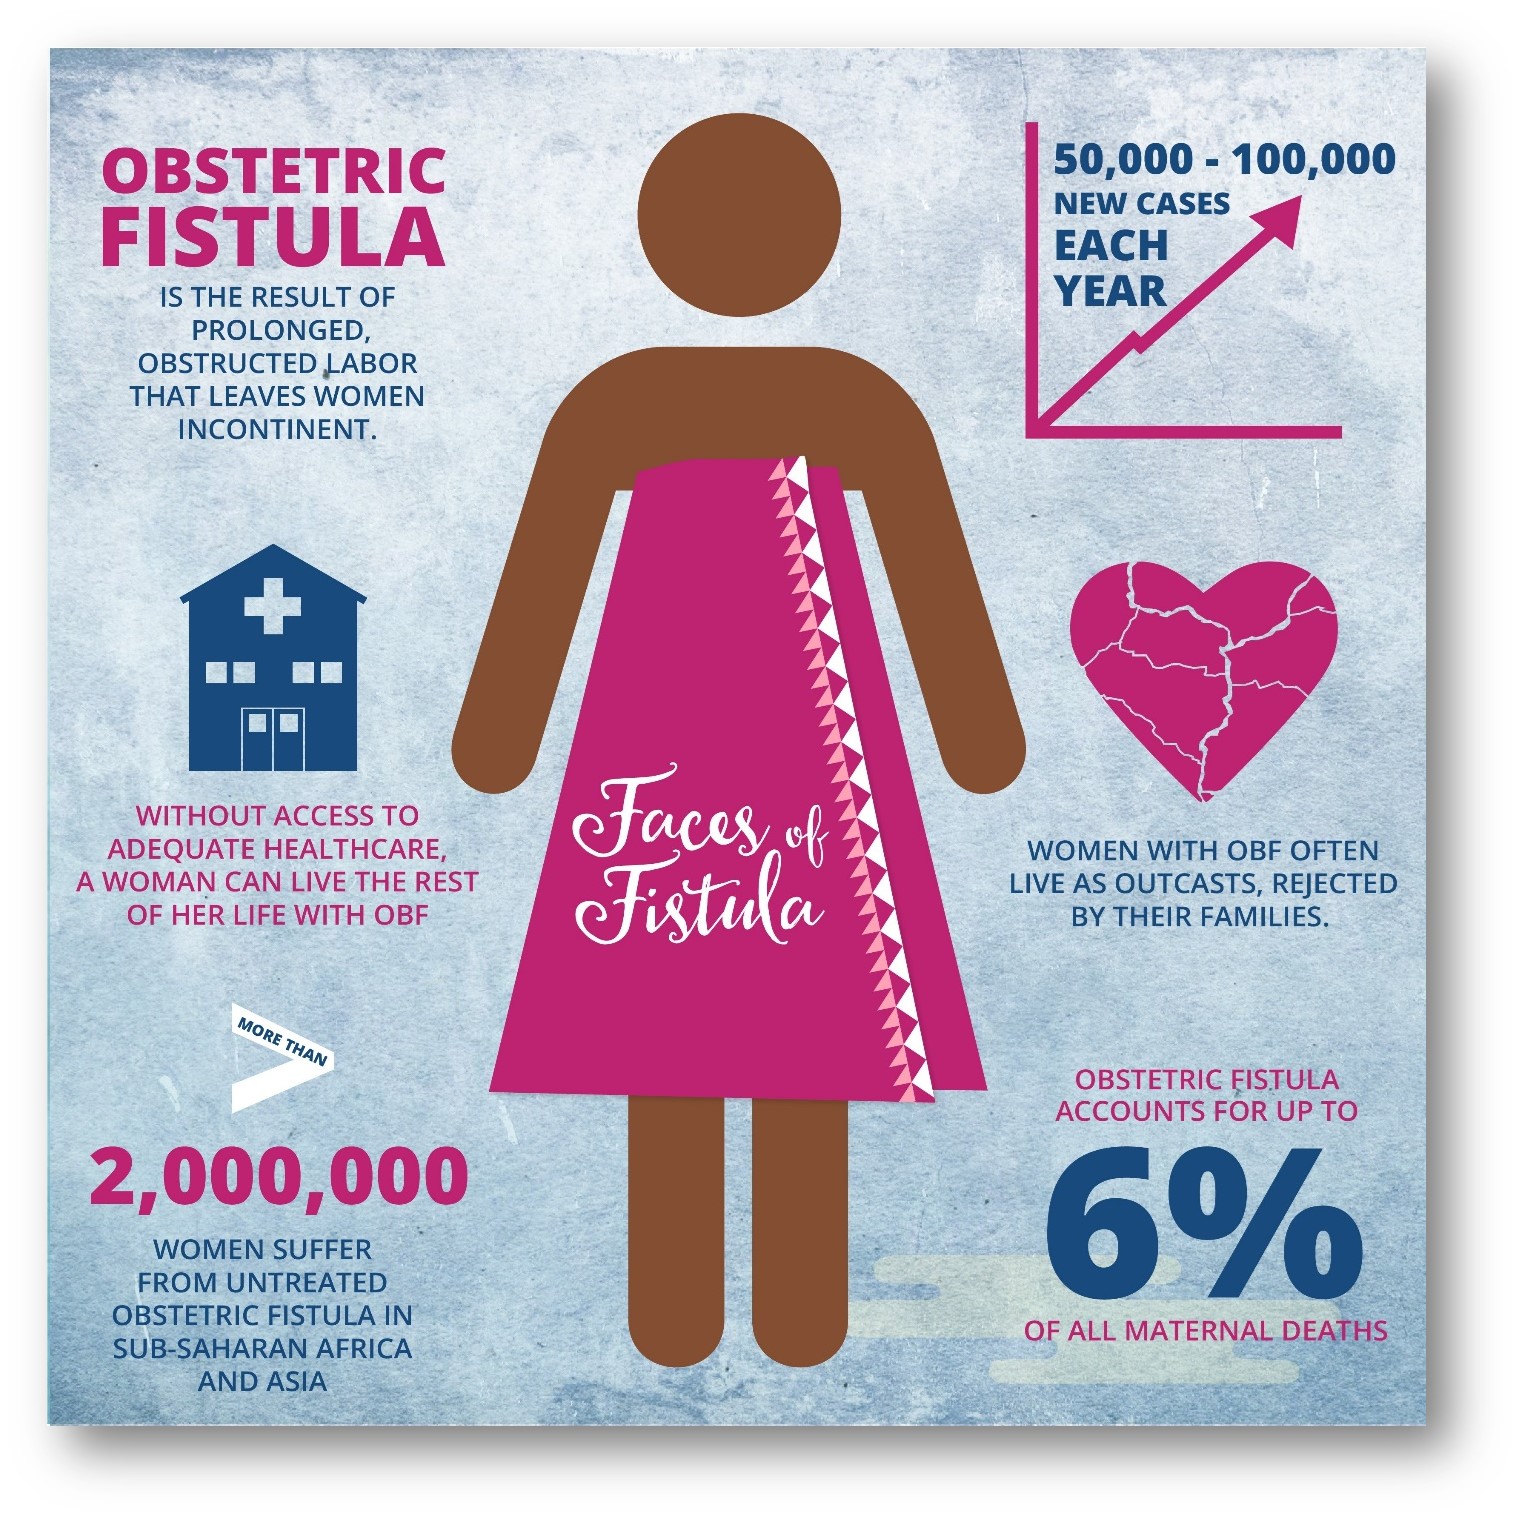 Obstetric fistula facts